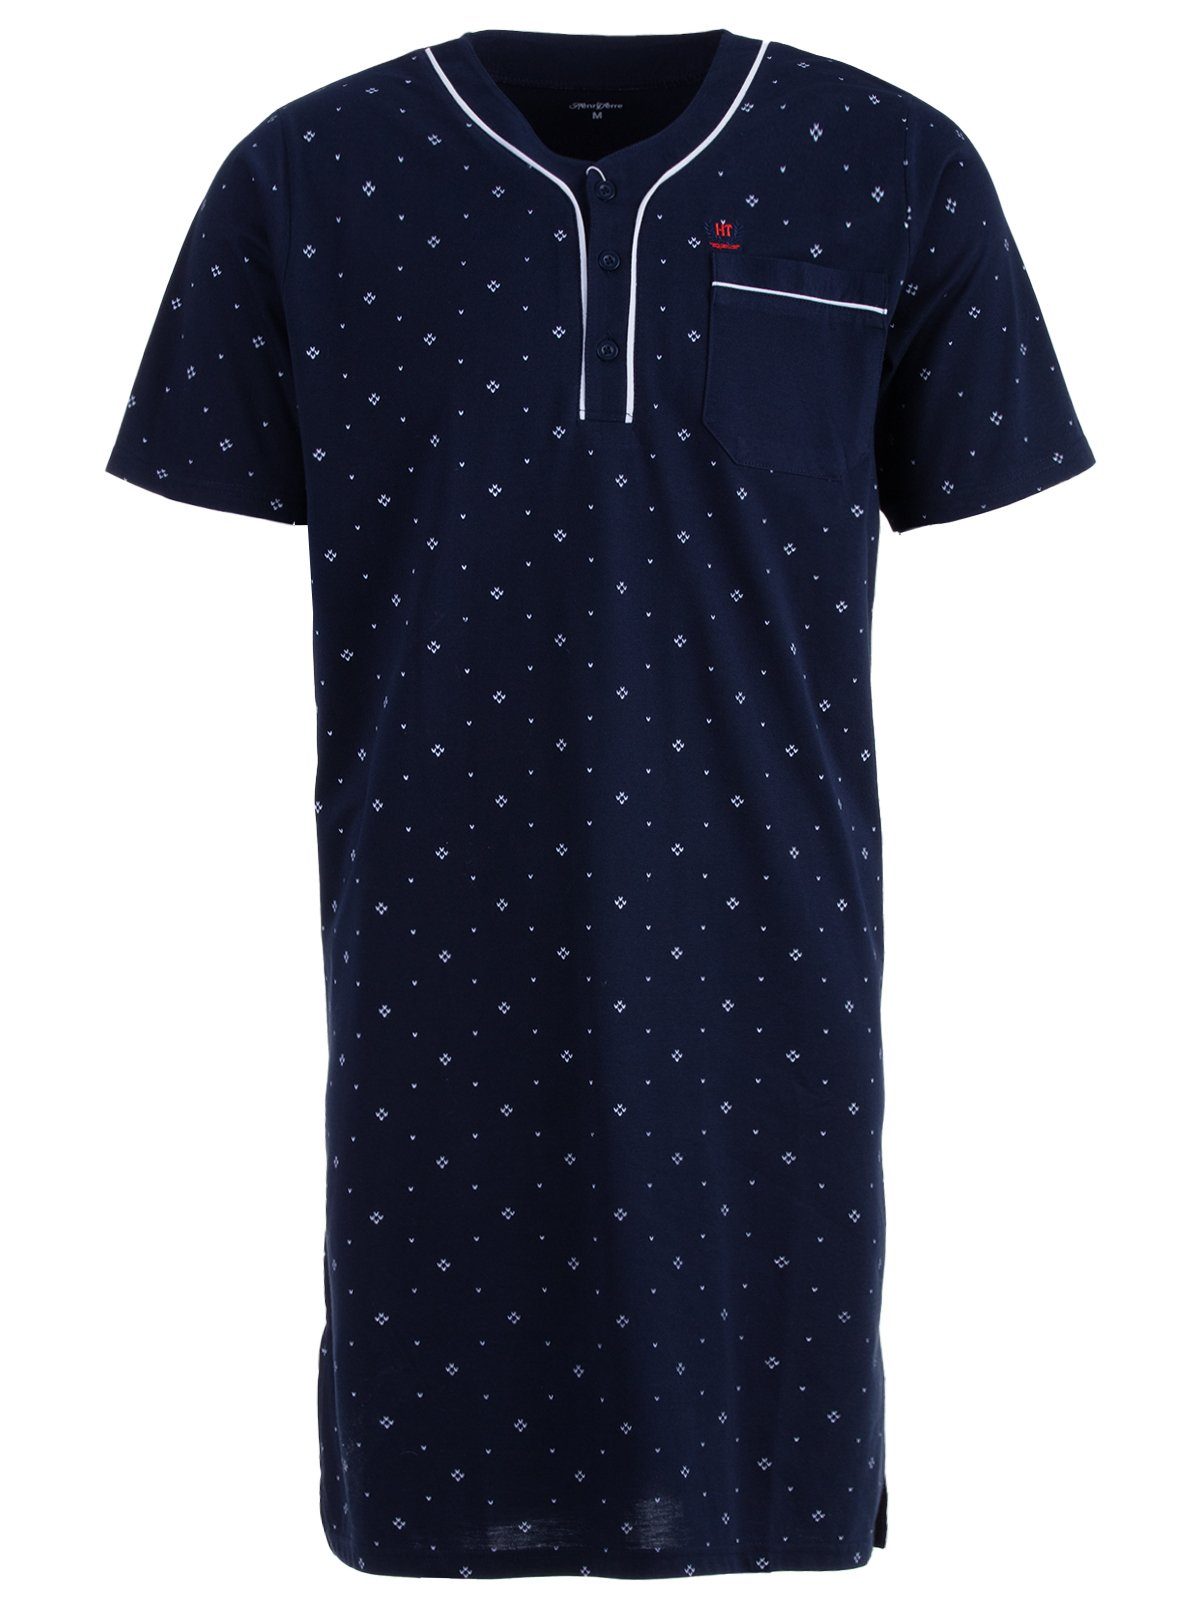 Henry Terre Nachthemd Nachthemd Kurzarm - Paspel Pfeil navy